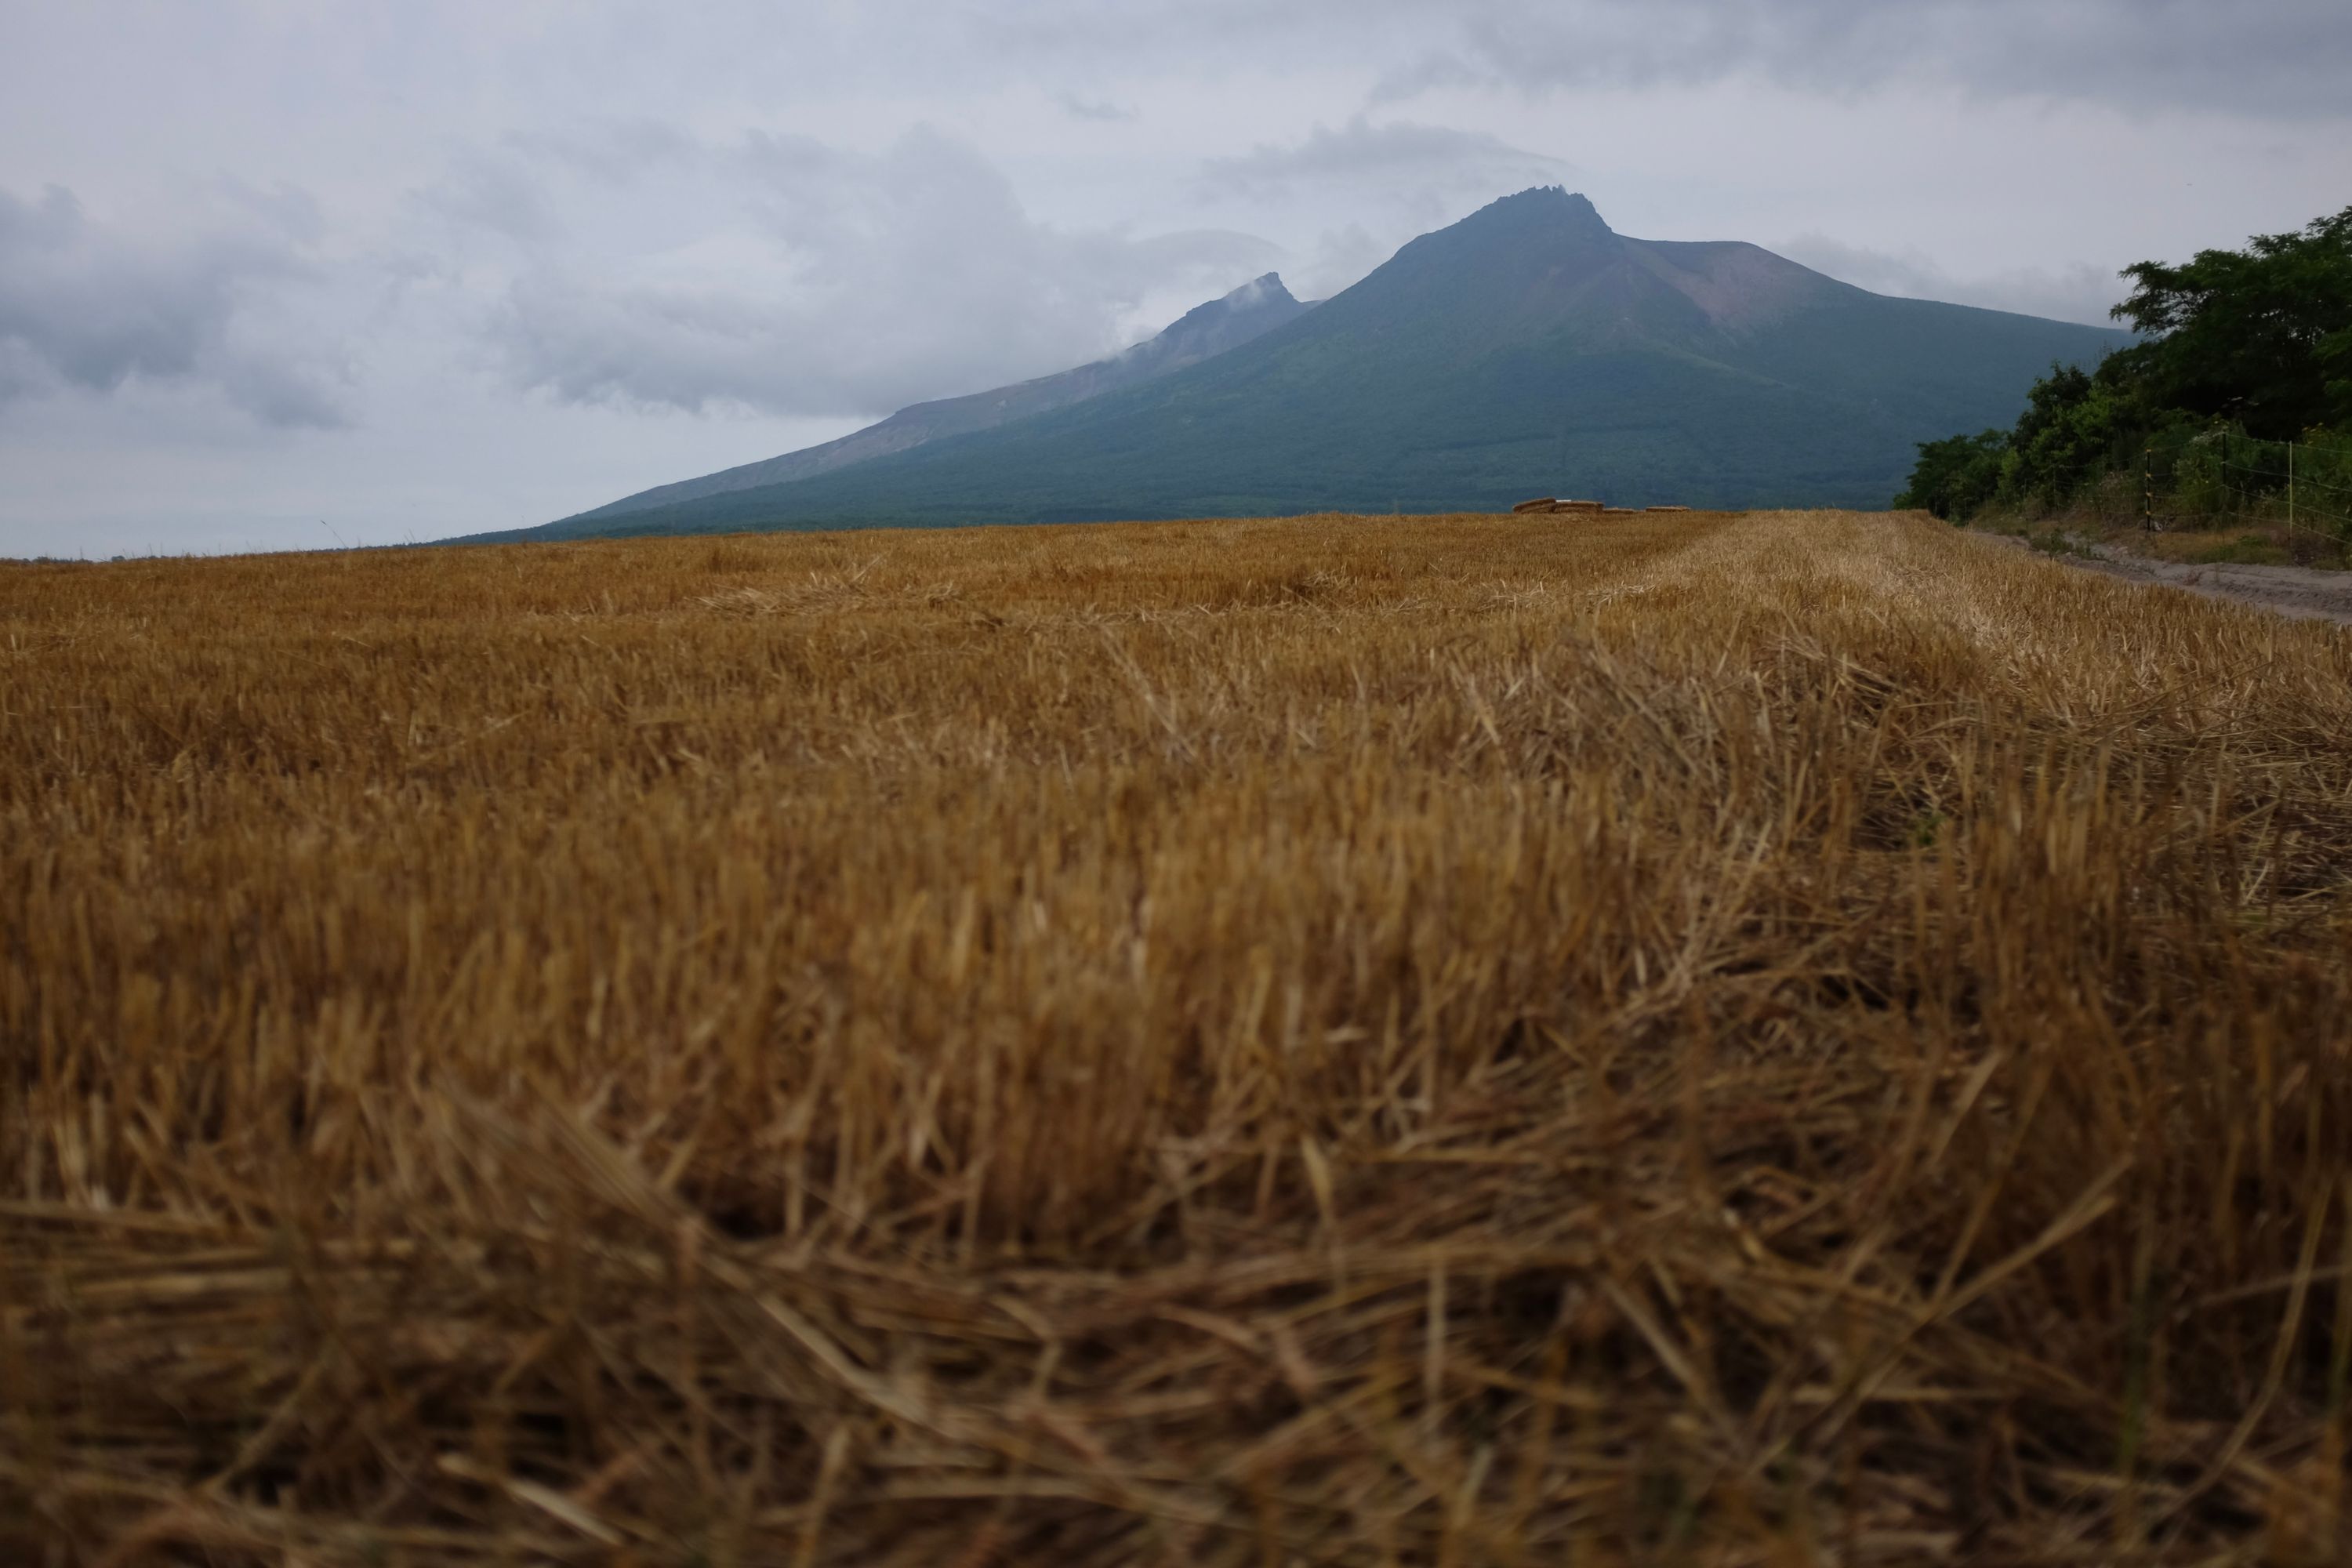 A dramatic-looking volcano, Mount Komagatake, on the horizon beyond golden wheat fields.